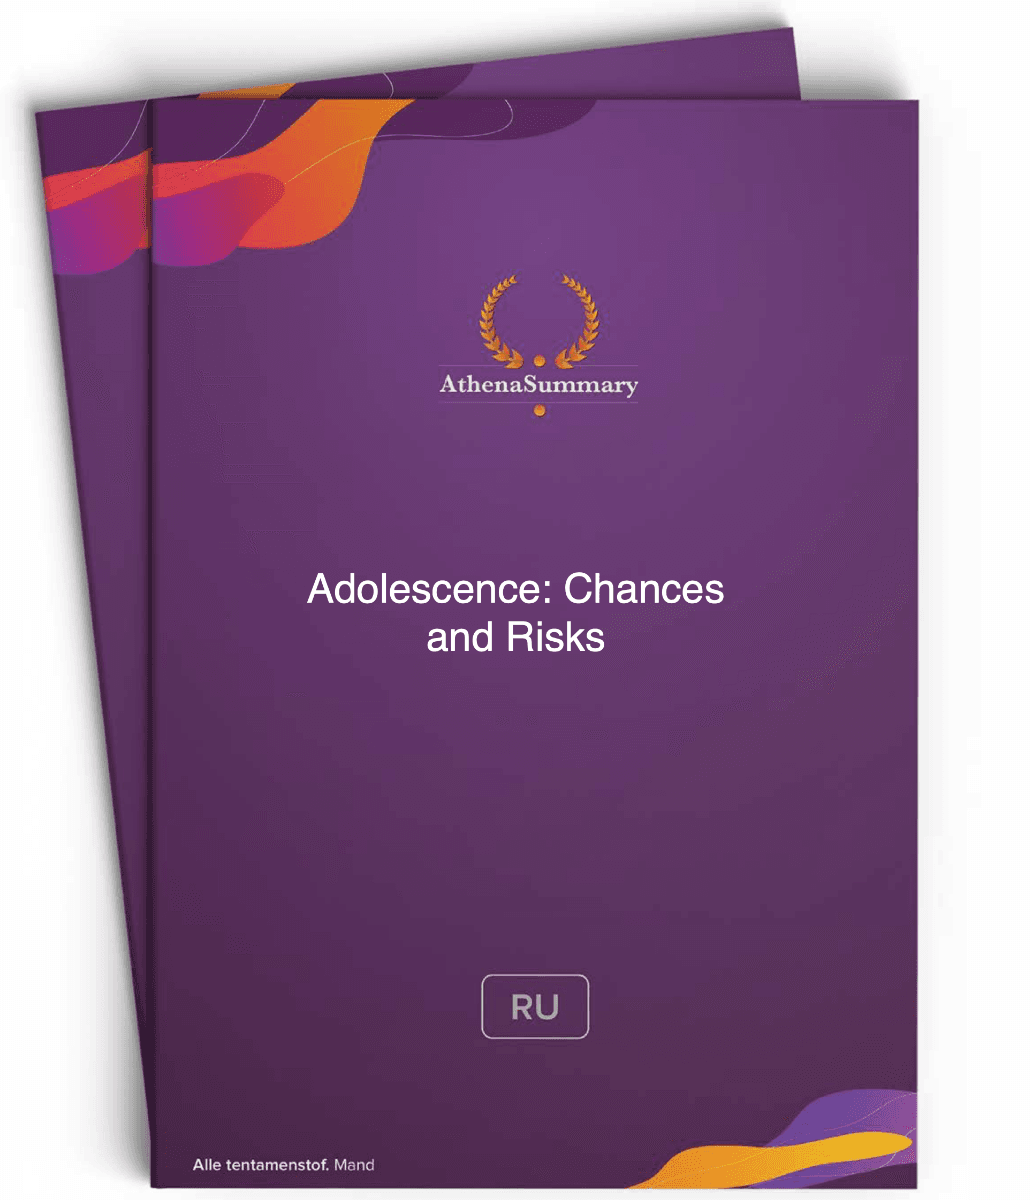 Literature Summary - Adolescence: Chances and Risks